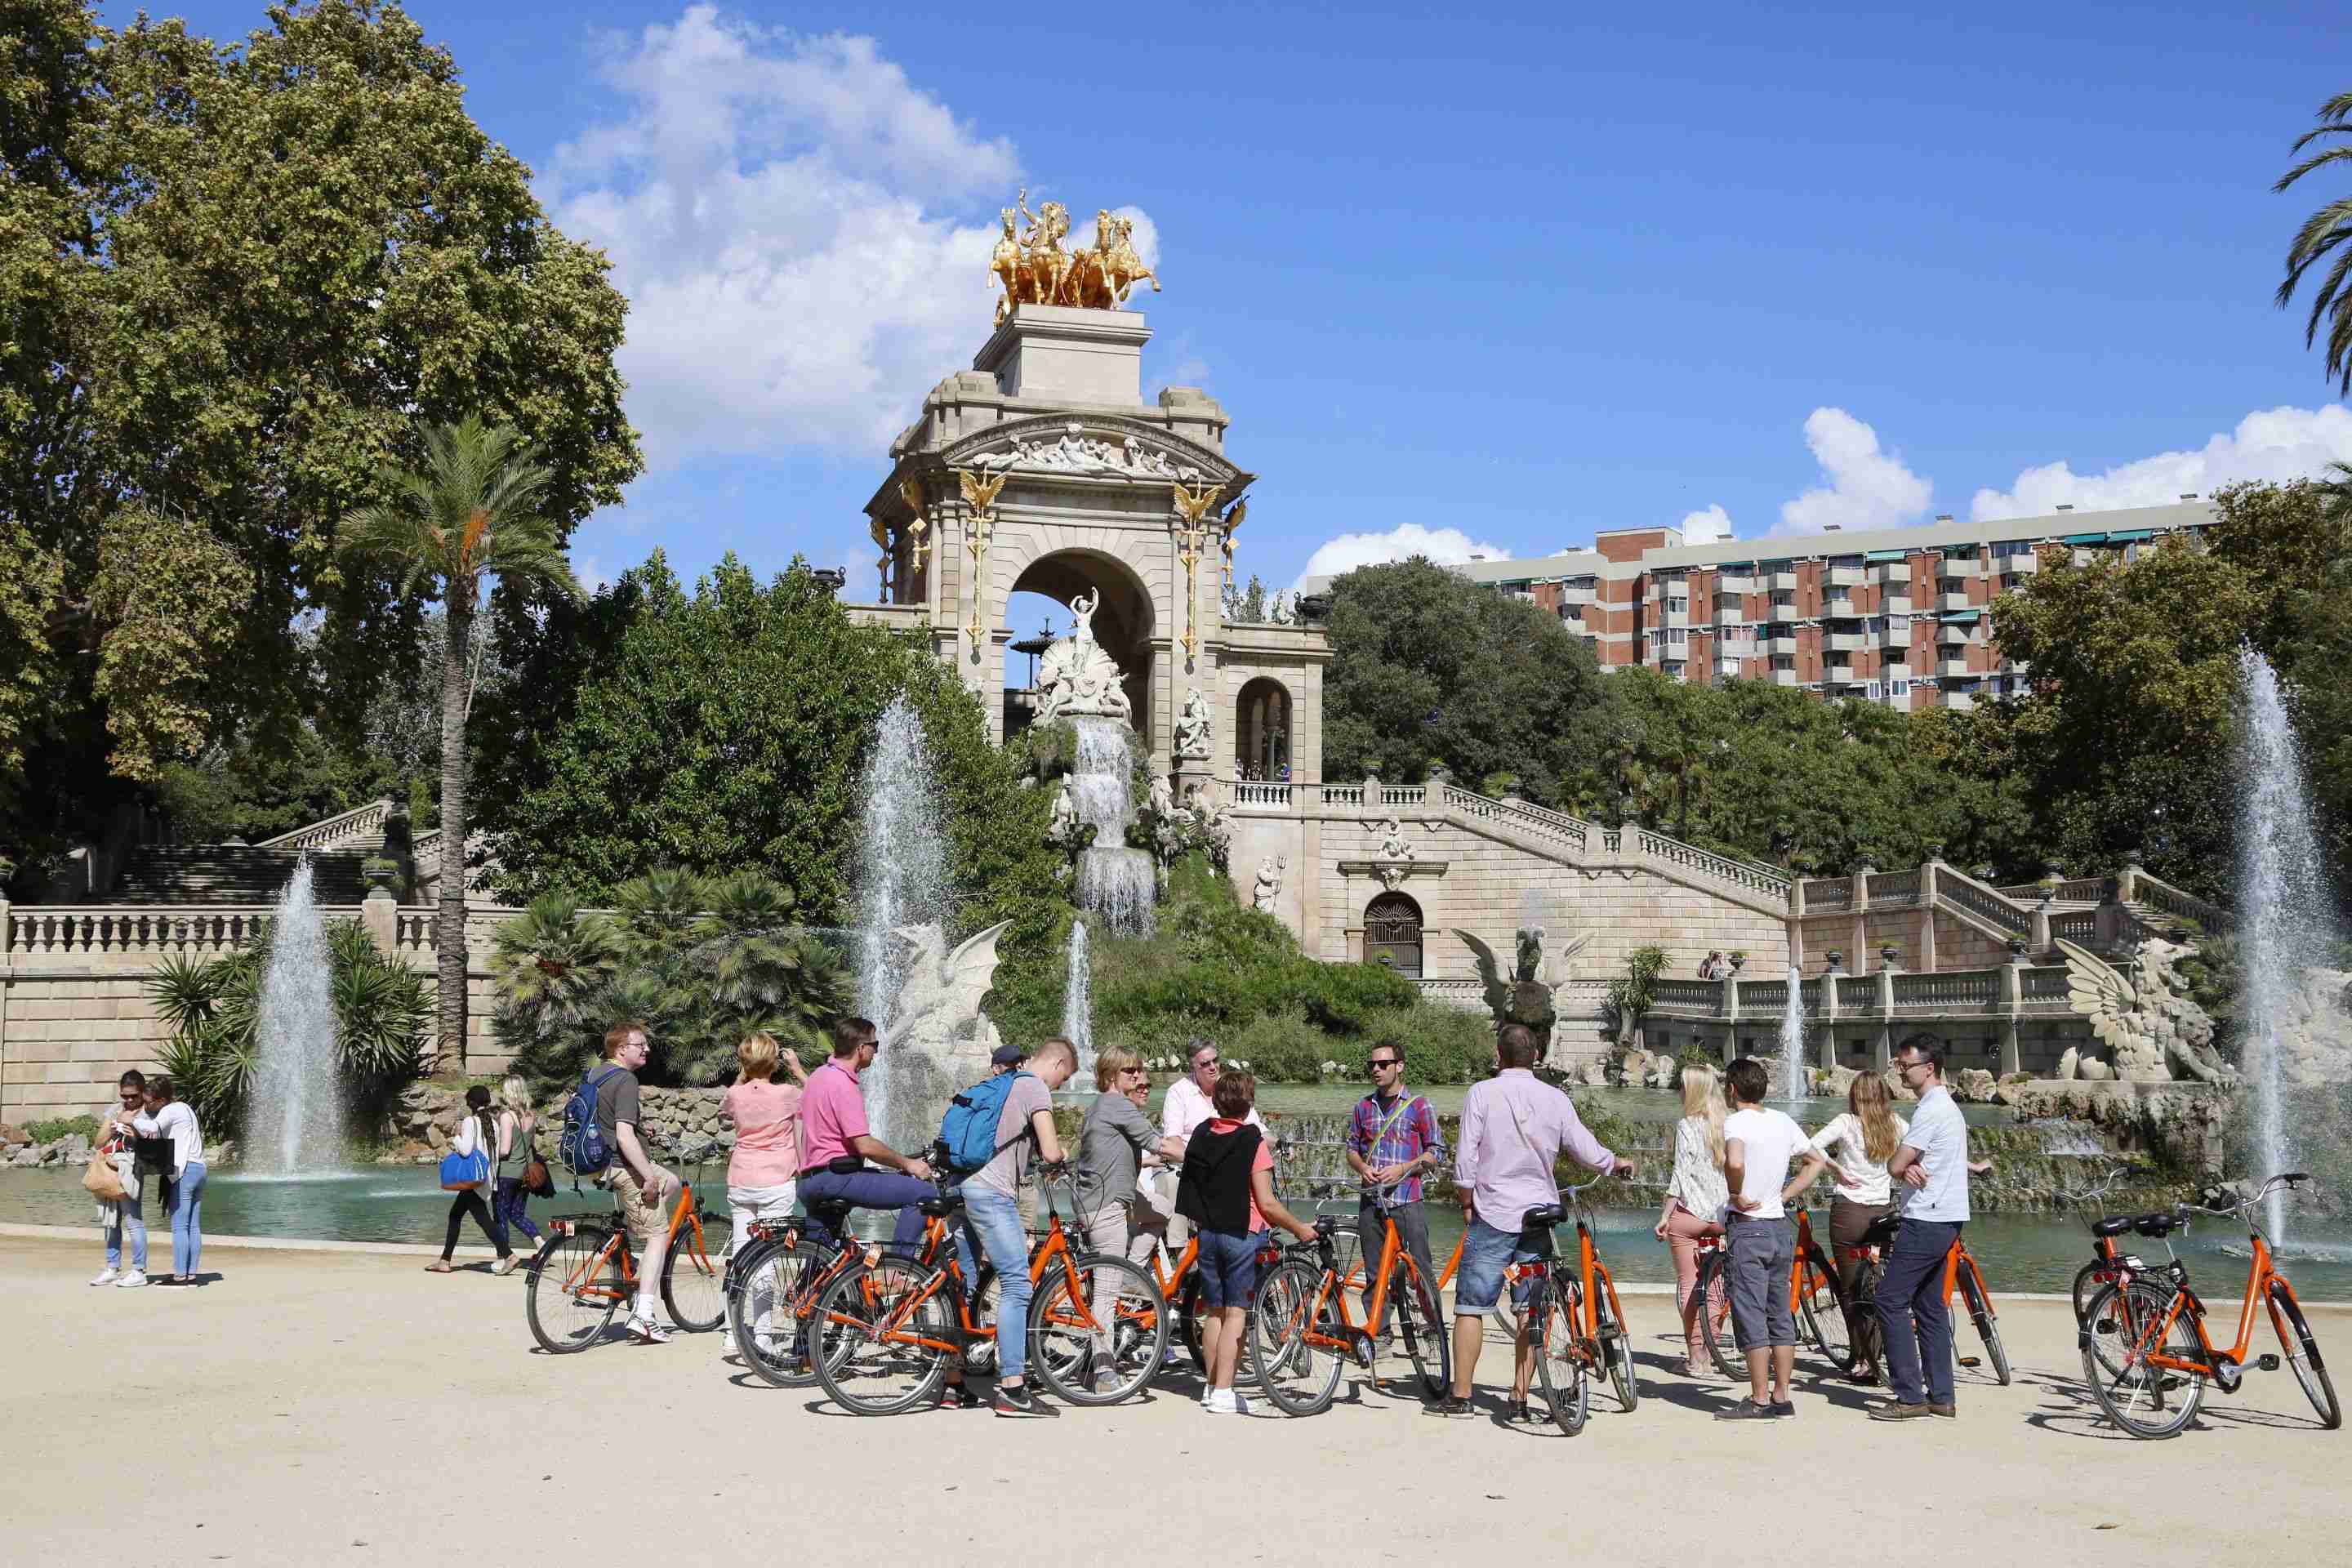 La turismofòbia passa factura: La CNN desaconsella visitar Barcelona